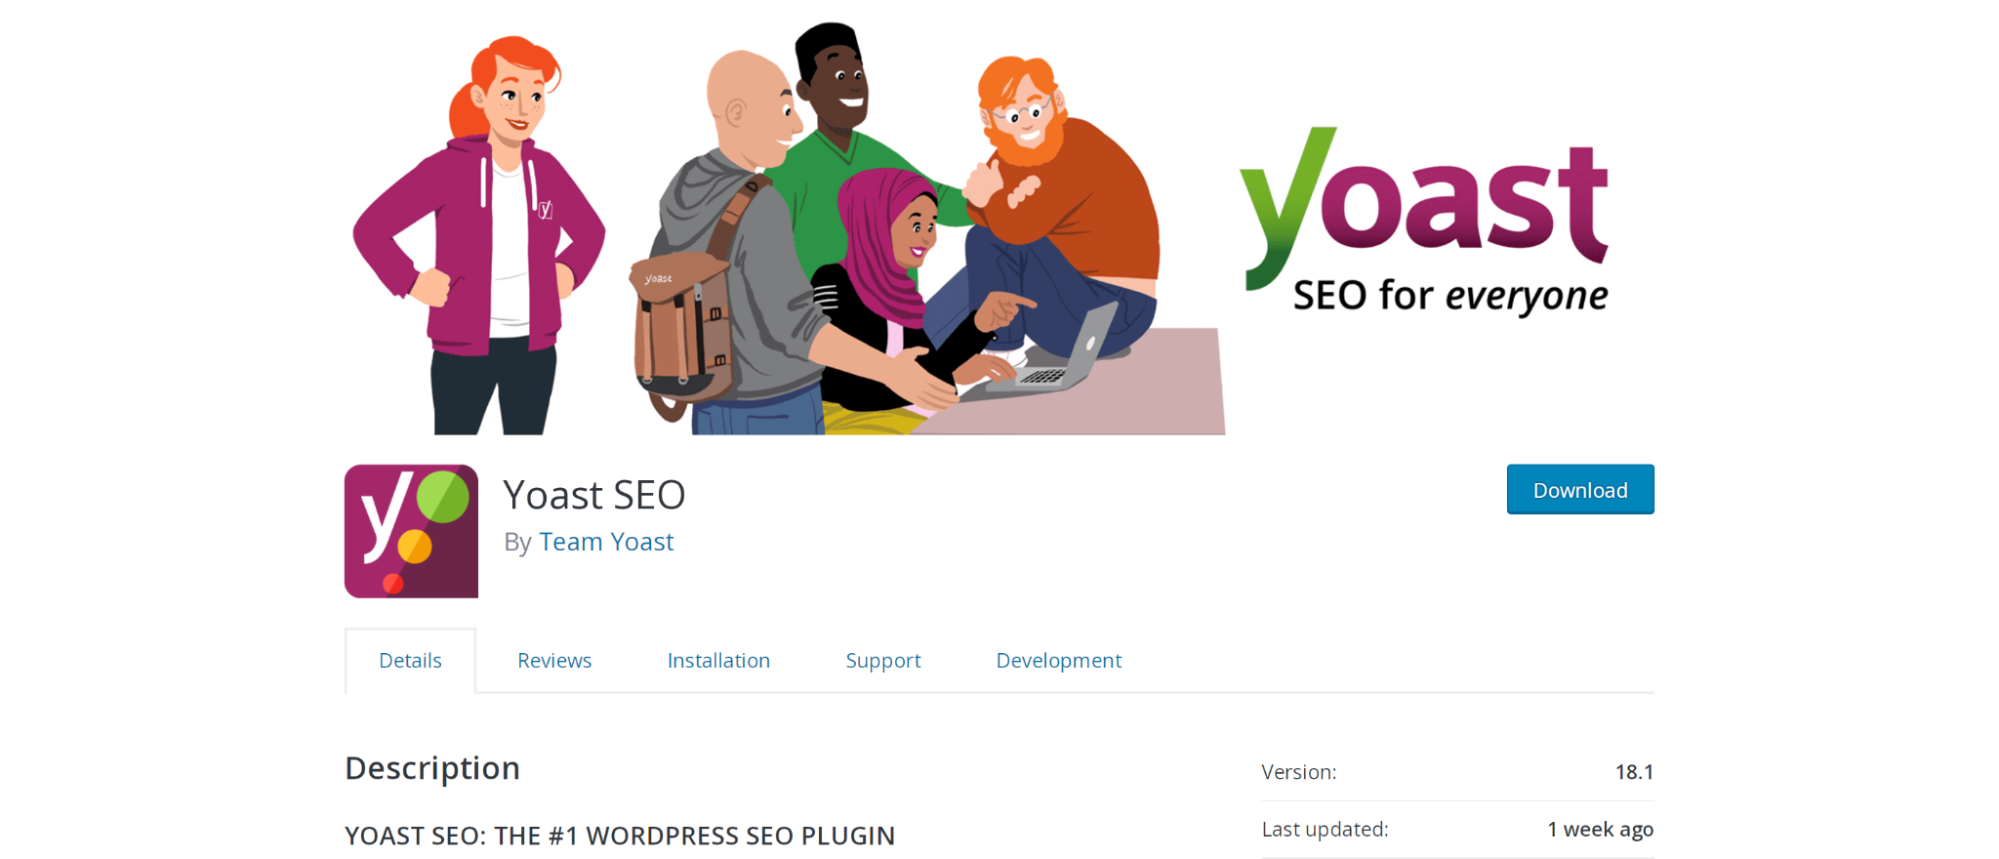 Yoast SEO image with the tagline "SEO for everyone"